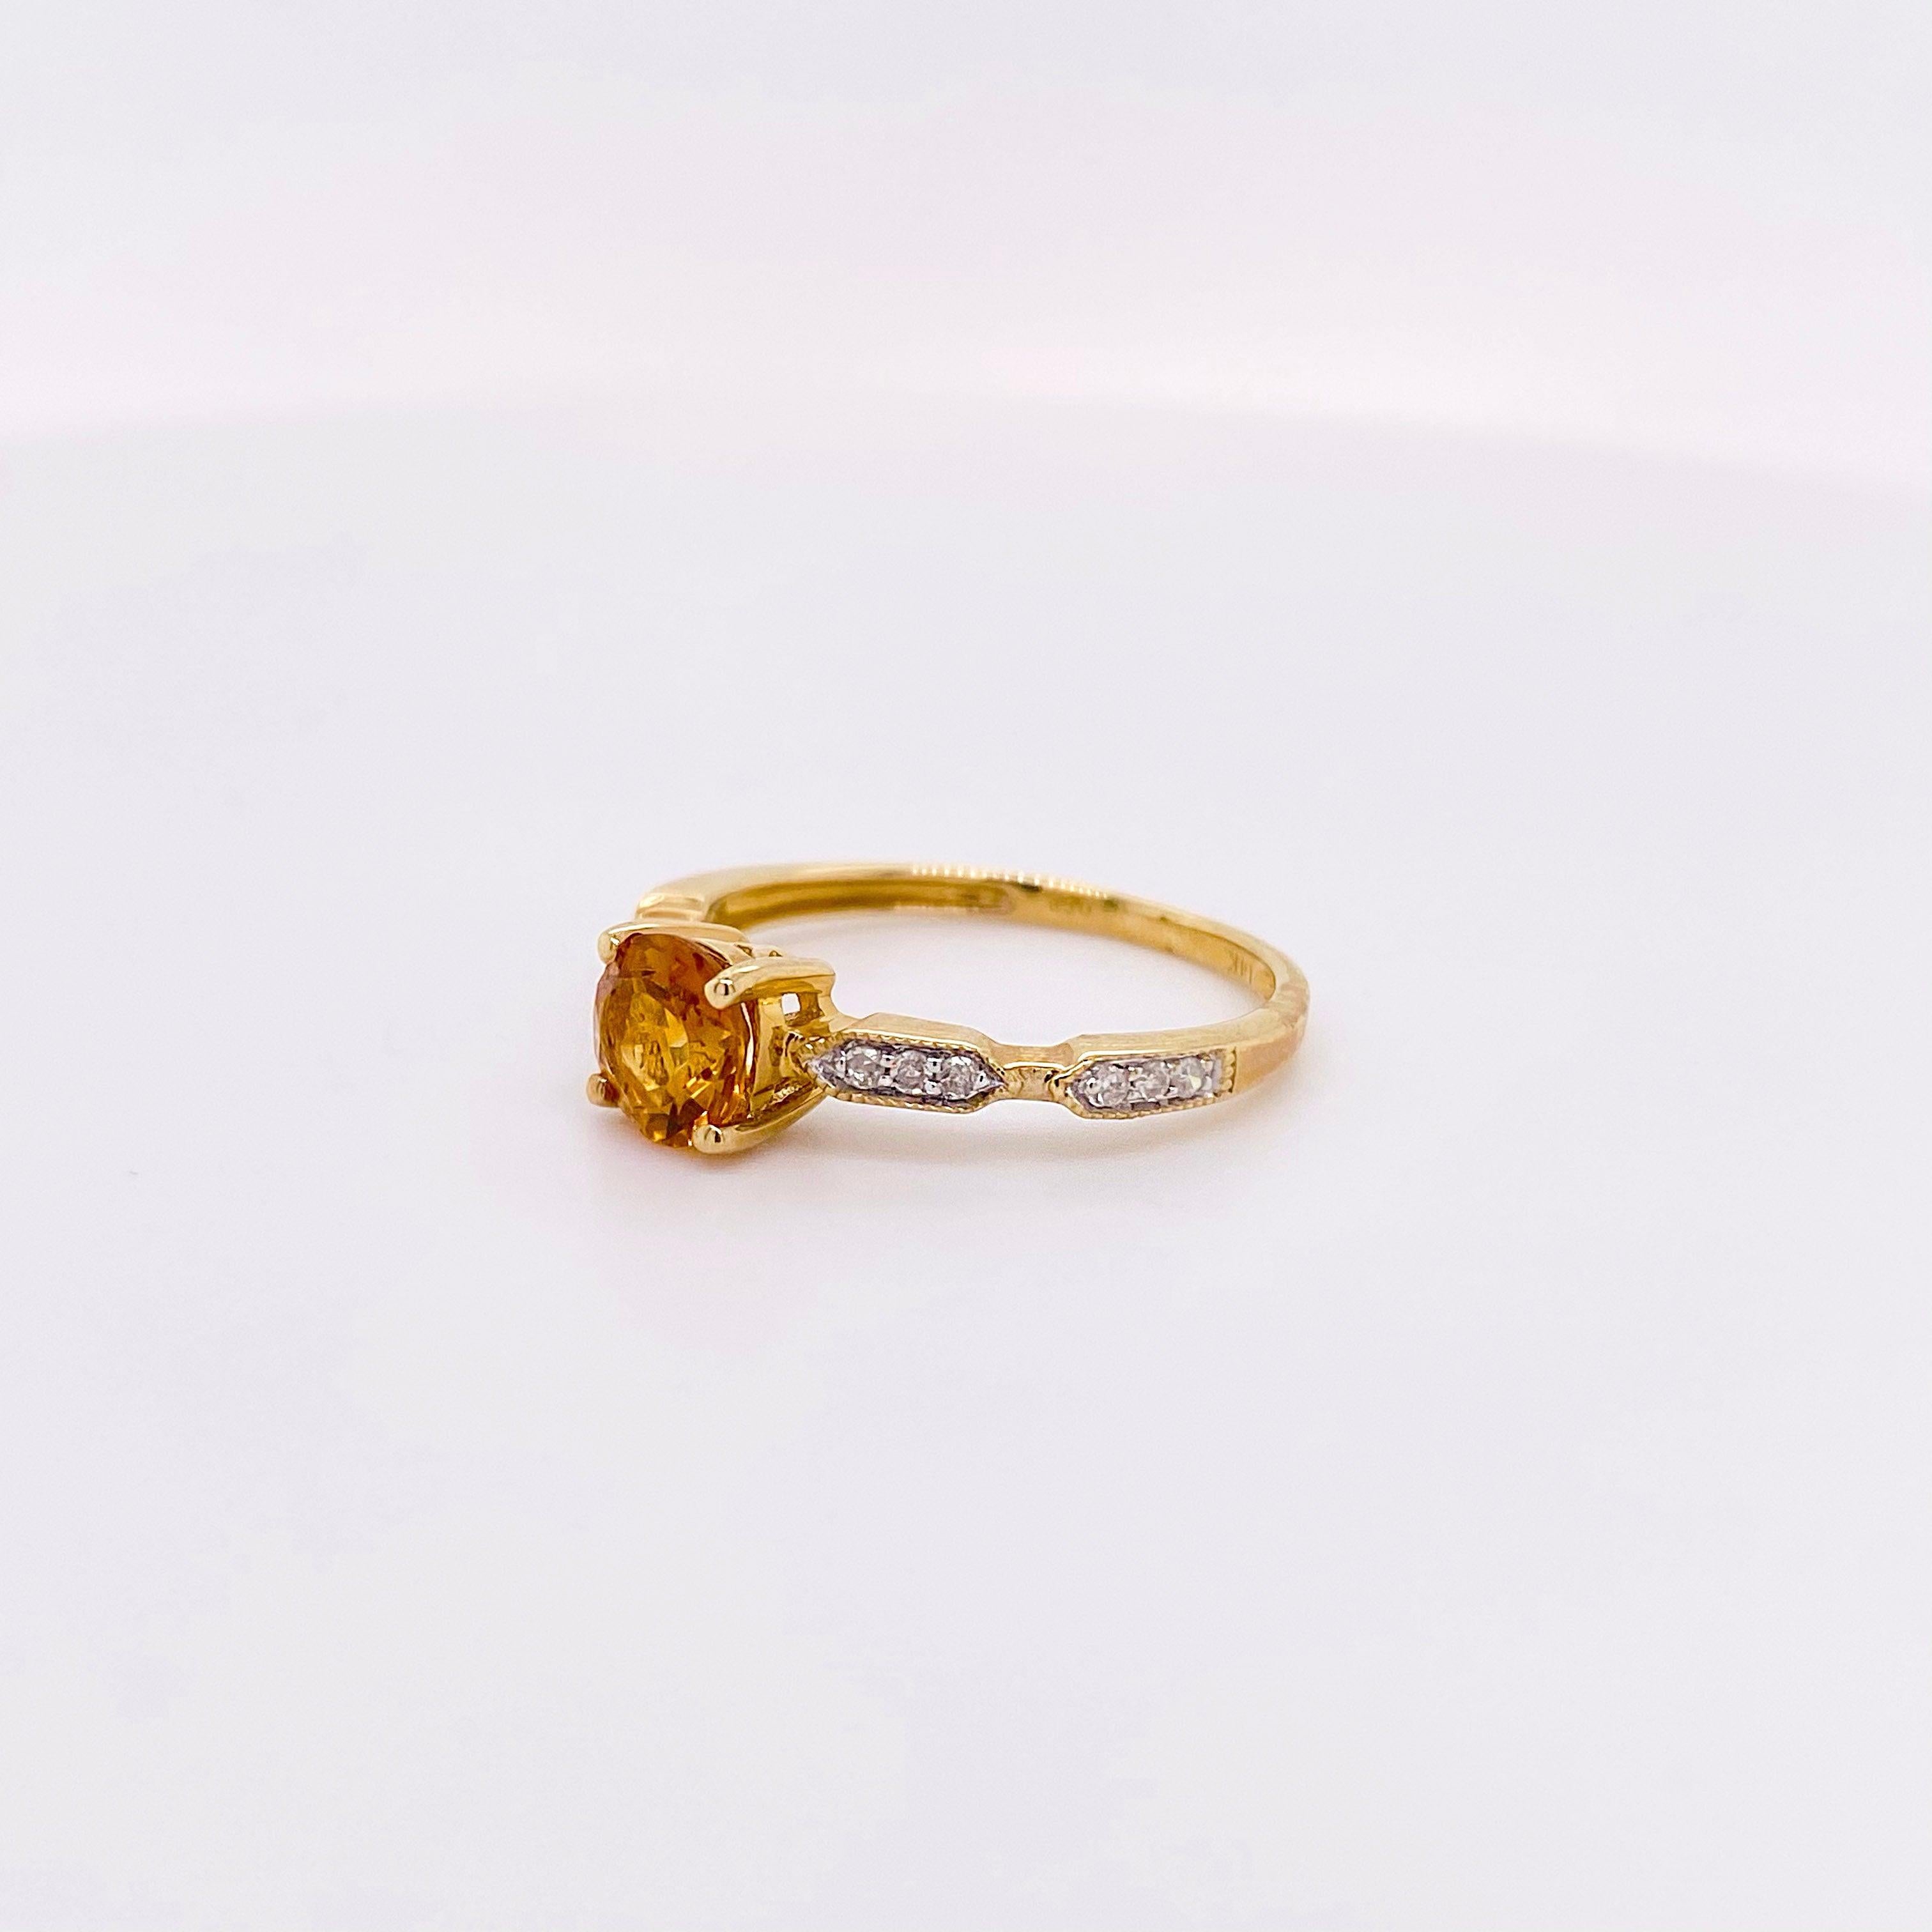 For Sale:  1.00 Carat Citrine and Diamond Ring 14 Karat Yellow Gold Ring November 4